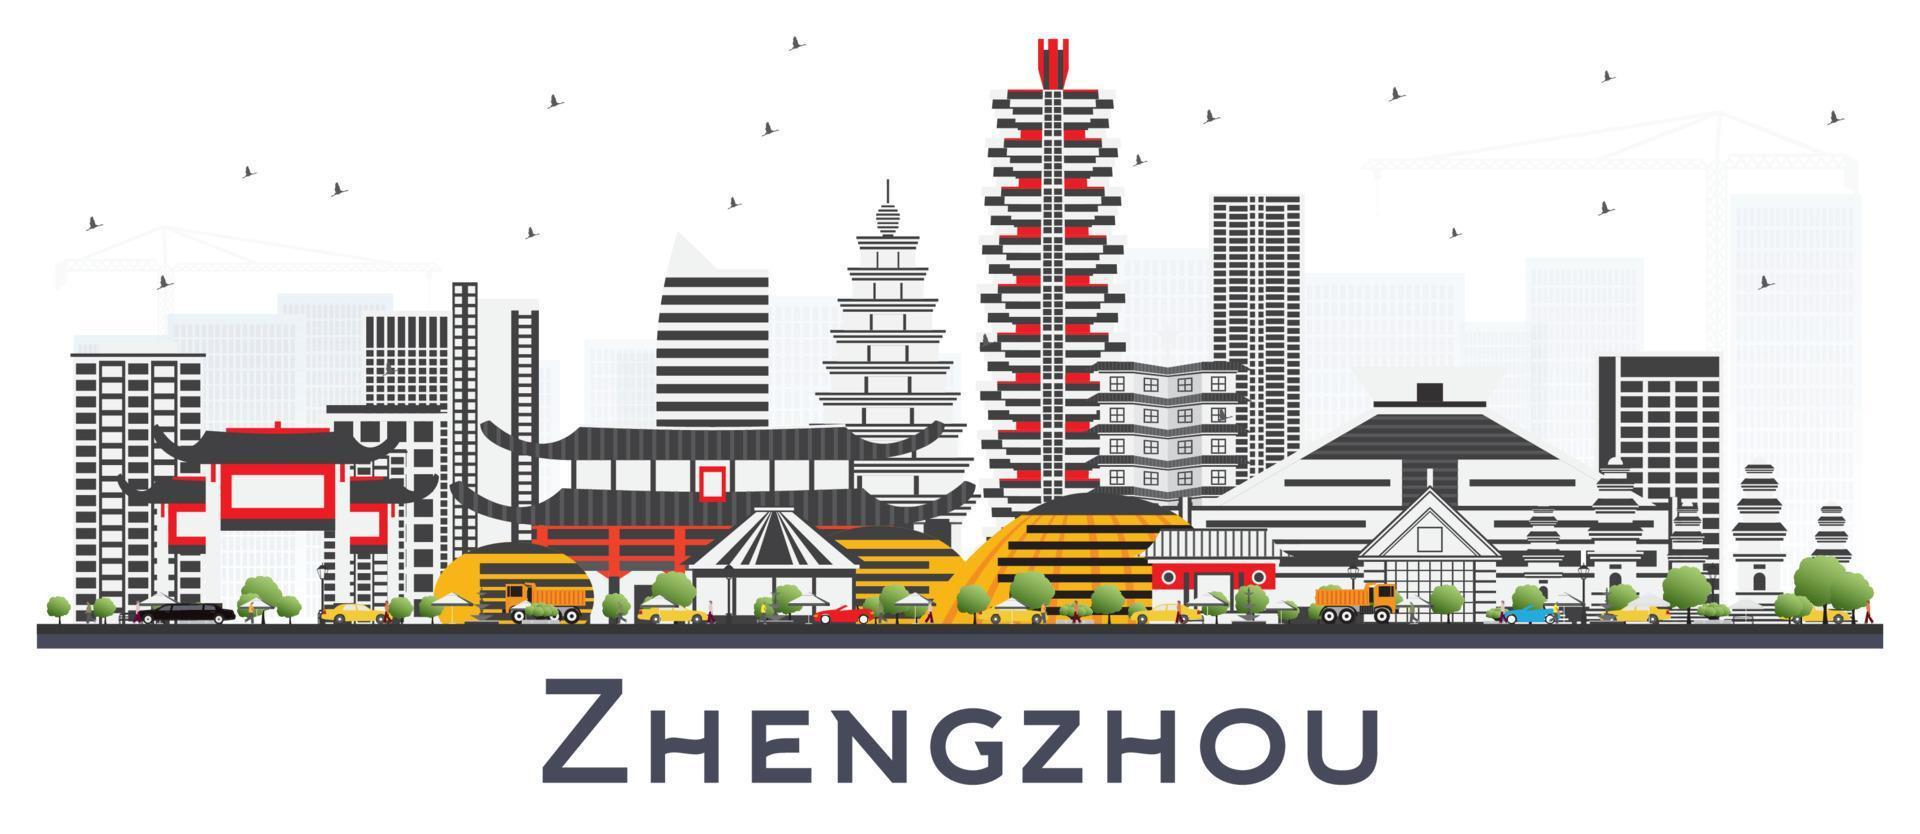 zhengzhou Kina stad horisont med grå byggnader isolerat på vit. vektor